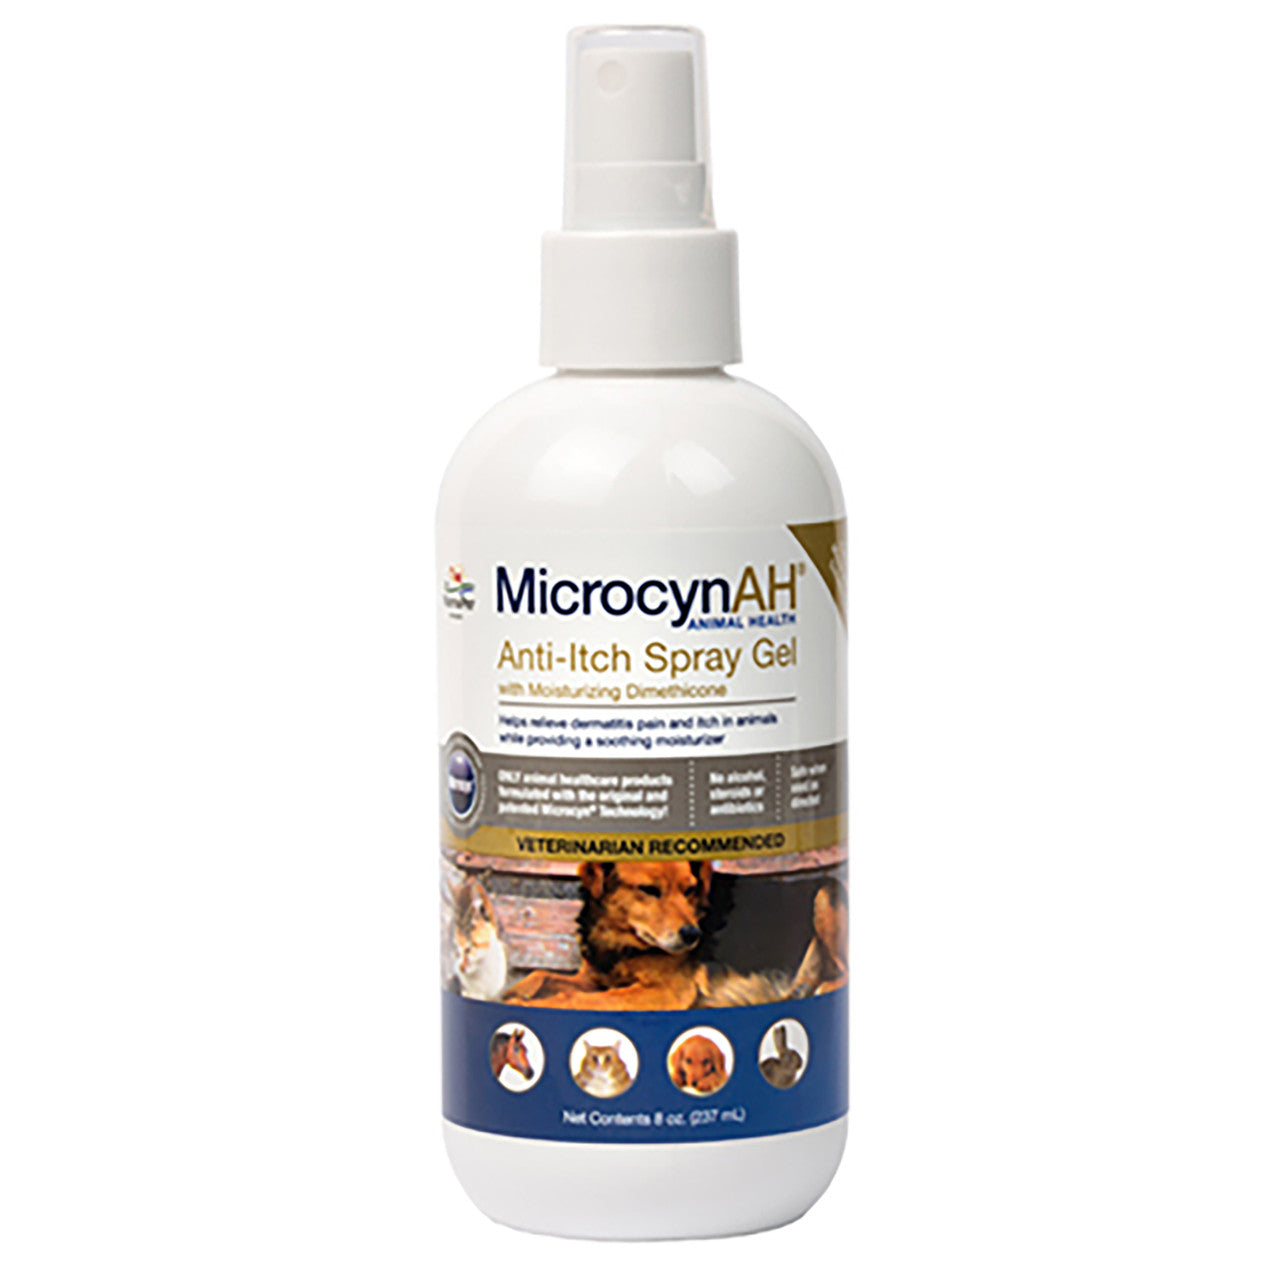 MicrocynAH Anti-Itch Spray Gel 8 oz